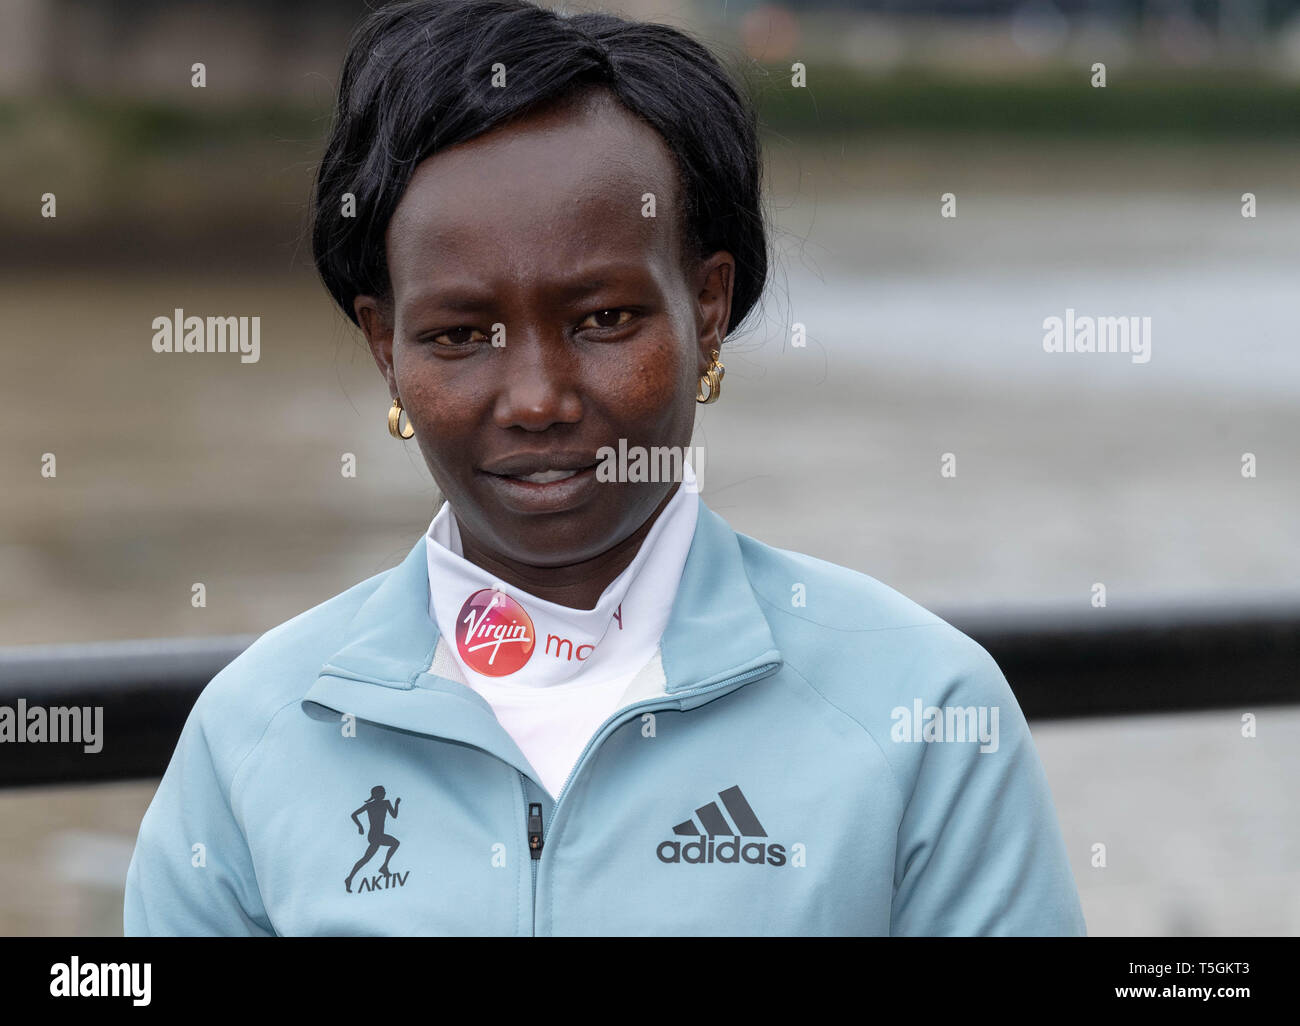 London 25 thApril 2019, Elite Läufer Virgin Money London Marathon Photocall für Frauen, Mary Keitany, Kredit: Ian Davidson/Alamy leben Nachrichten Stockfoto